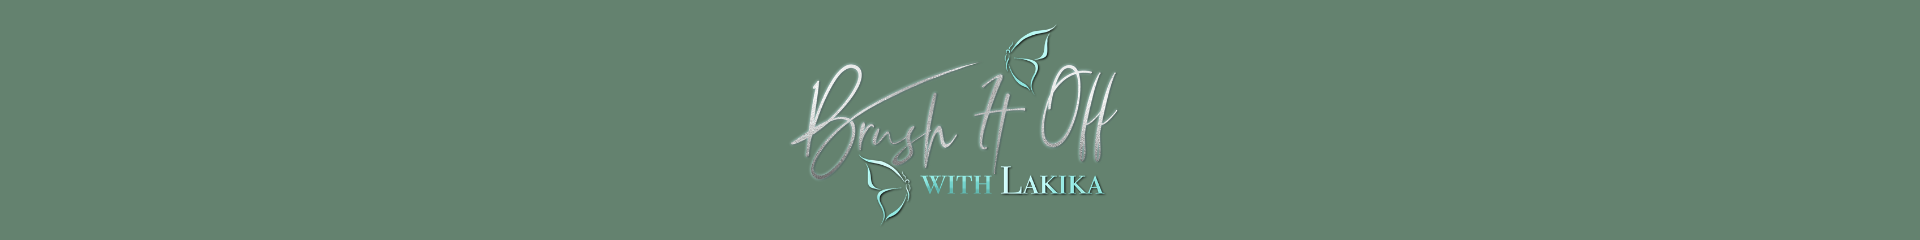 Just Brush It Off with Lakika Scott